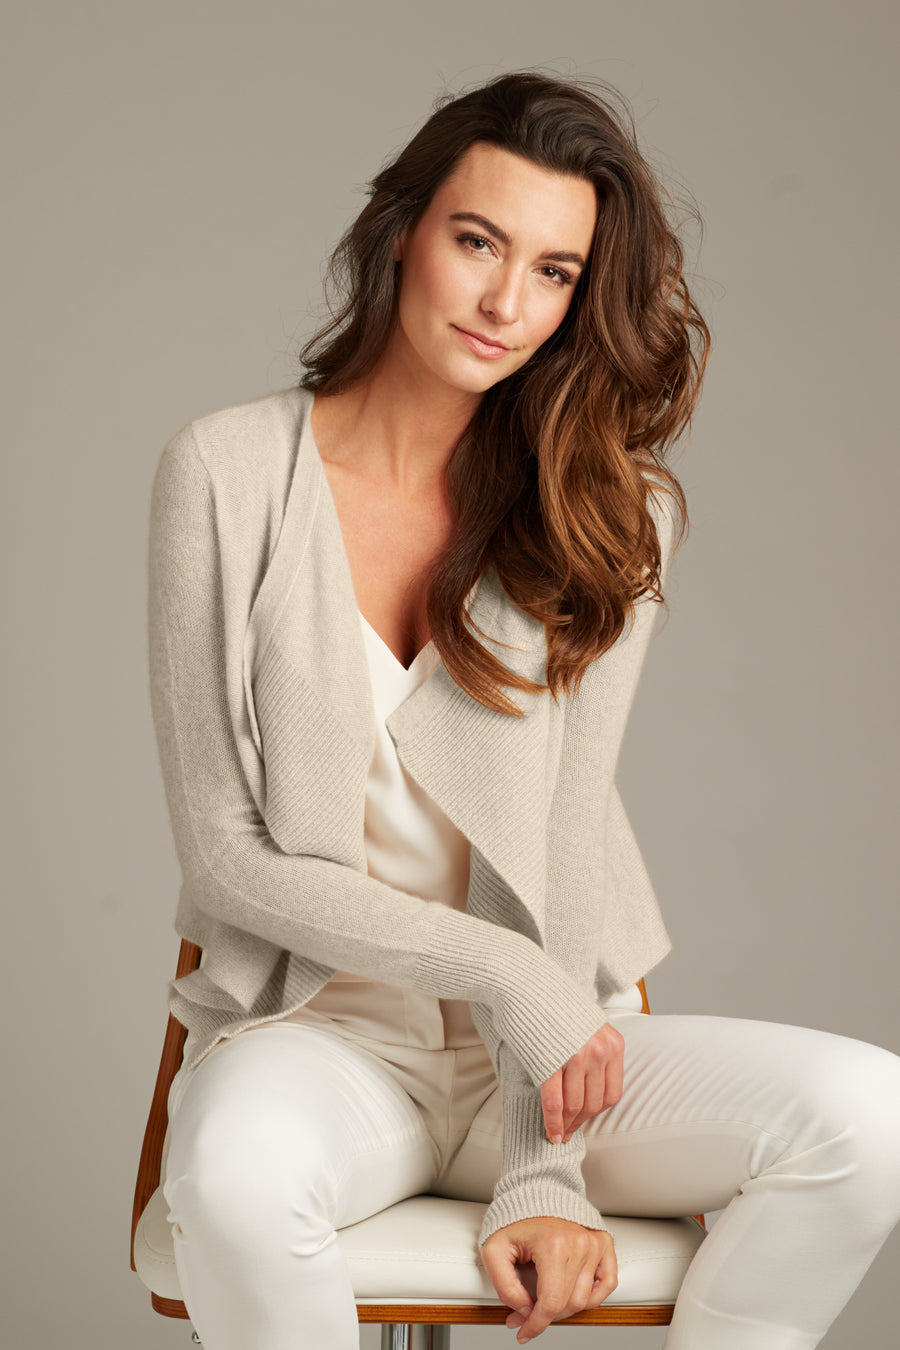 pine cashmere cami women's 100% pure cashmere open draped cardigan in white grey